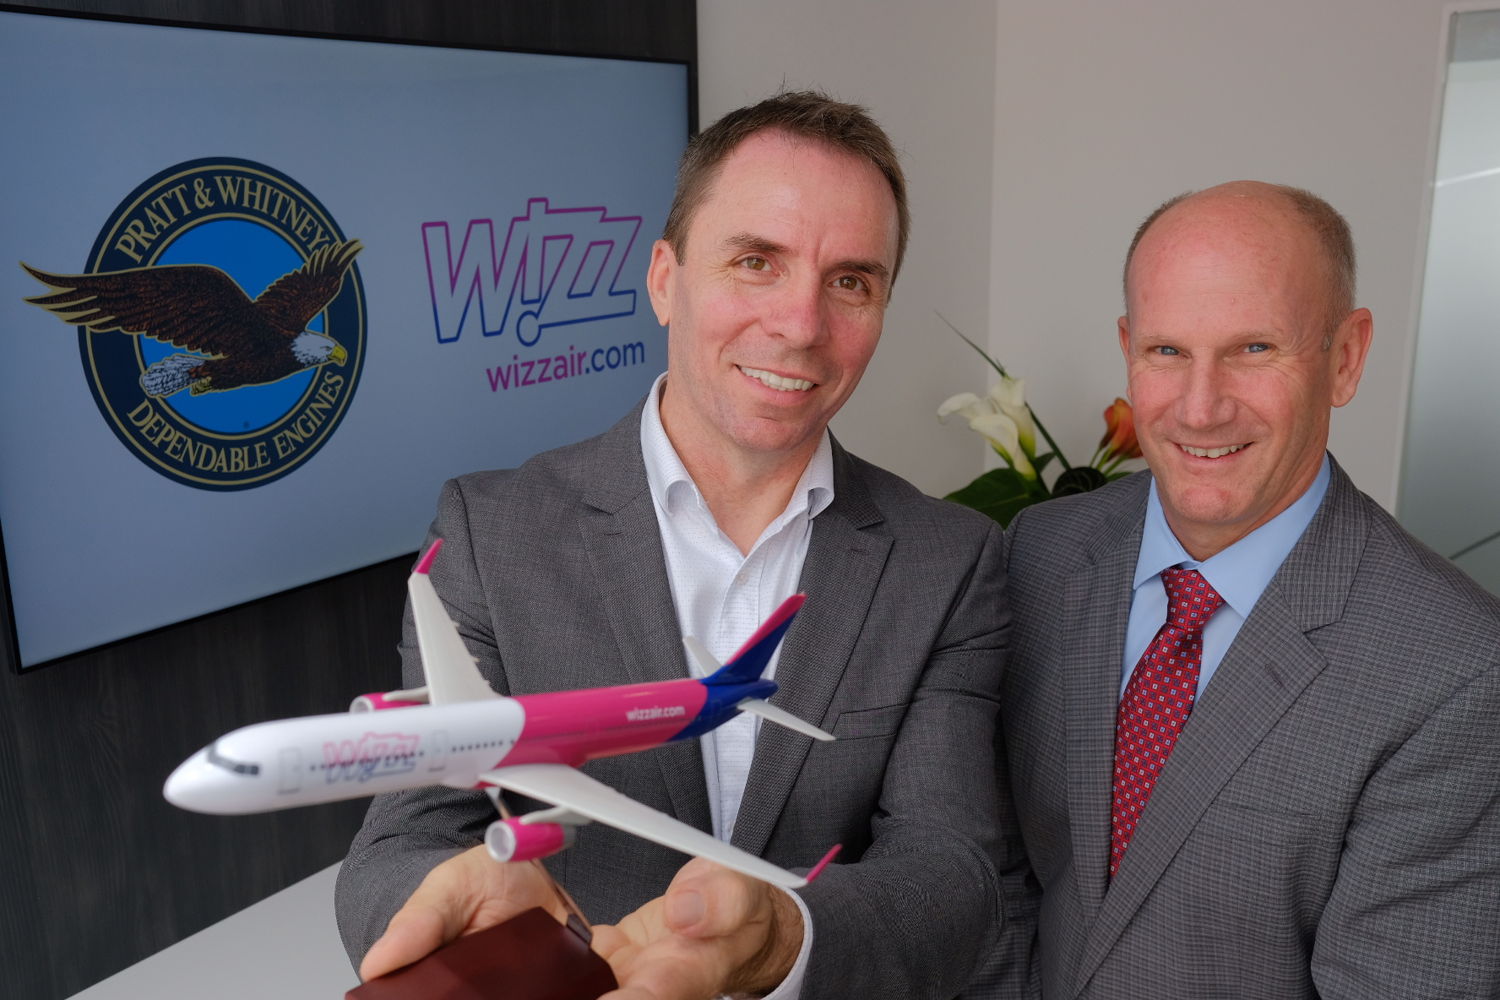 József Váradi, CEO van Wizz Air, en Rick Deurloo, Senior Vice President Sales en Customer Support van Pratt & Whitney